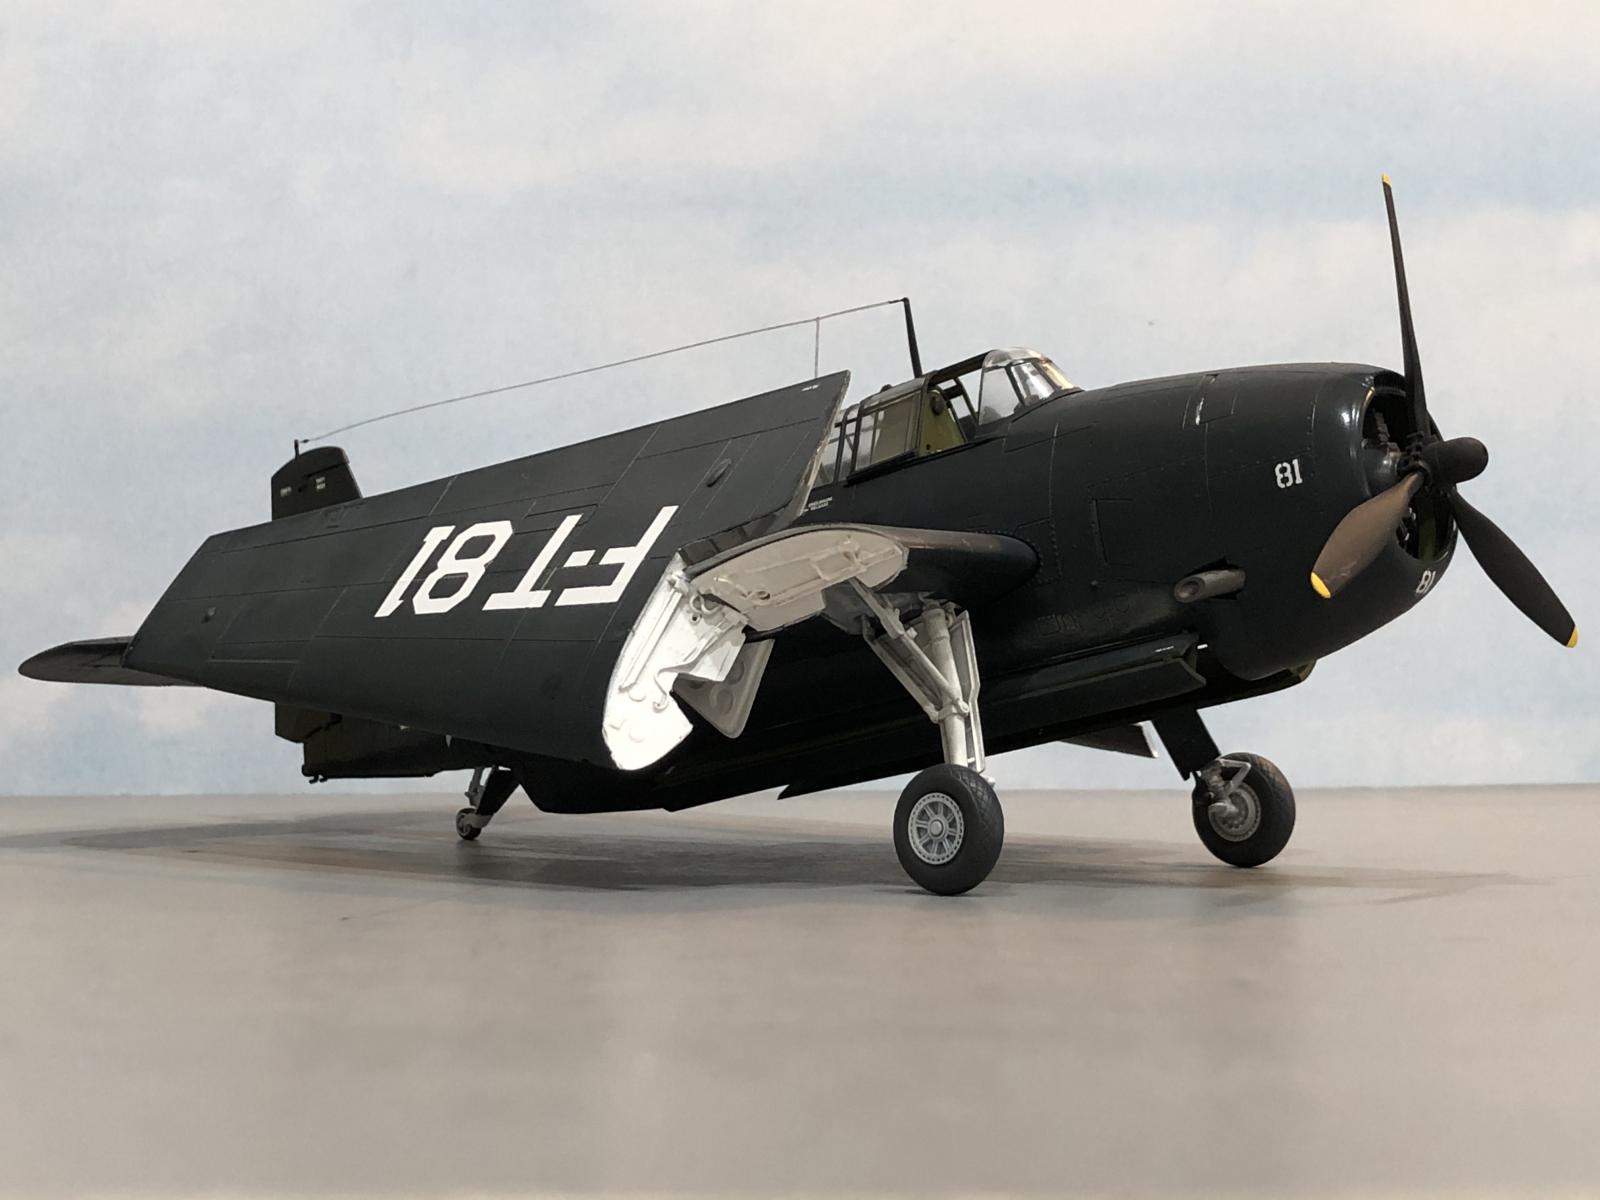 “Flight 19 Lost Squadron 75th Anniversary Tribute” Accurate Miniatures